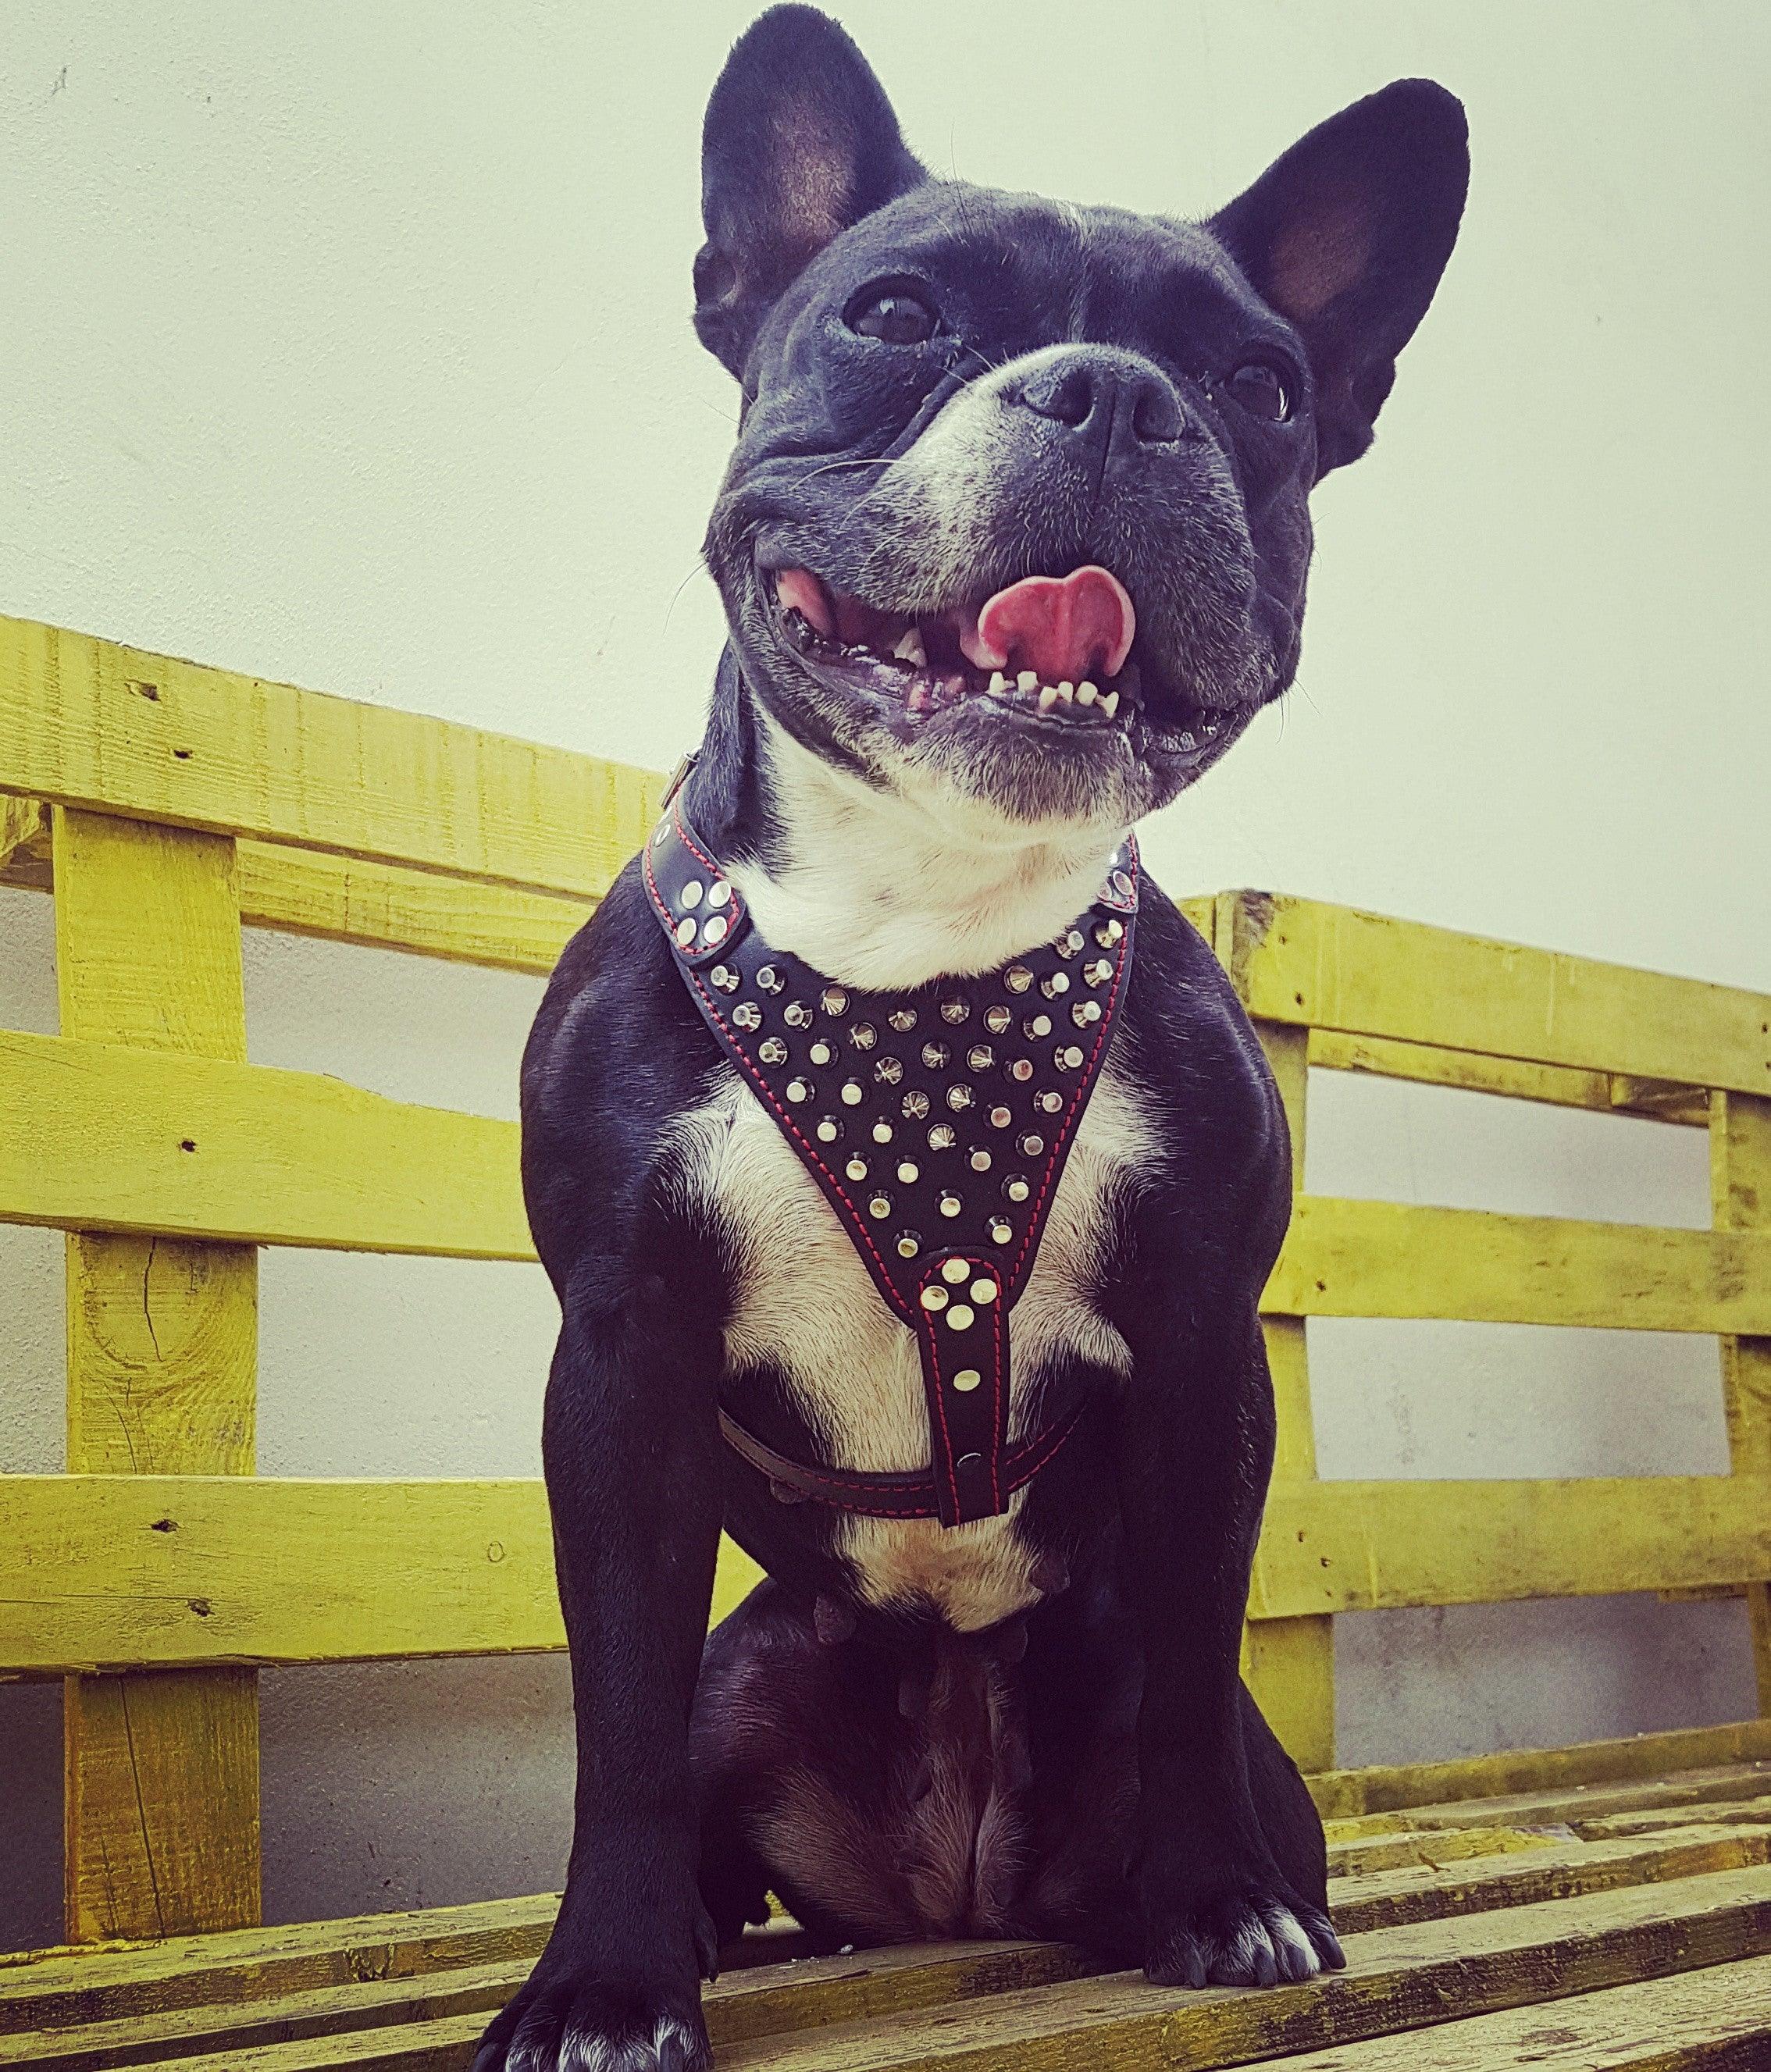 batman dog harness for french bulldogs